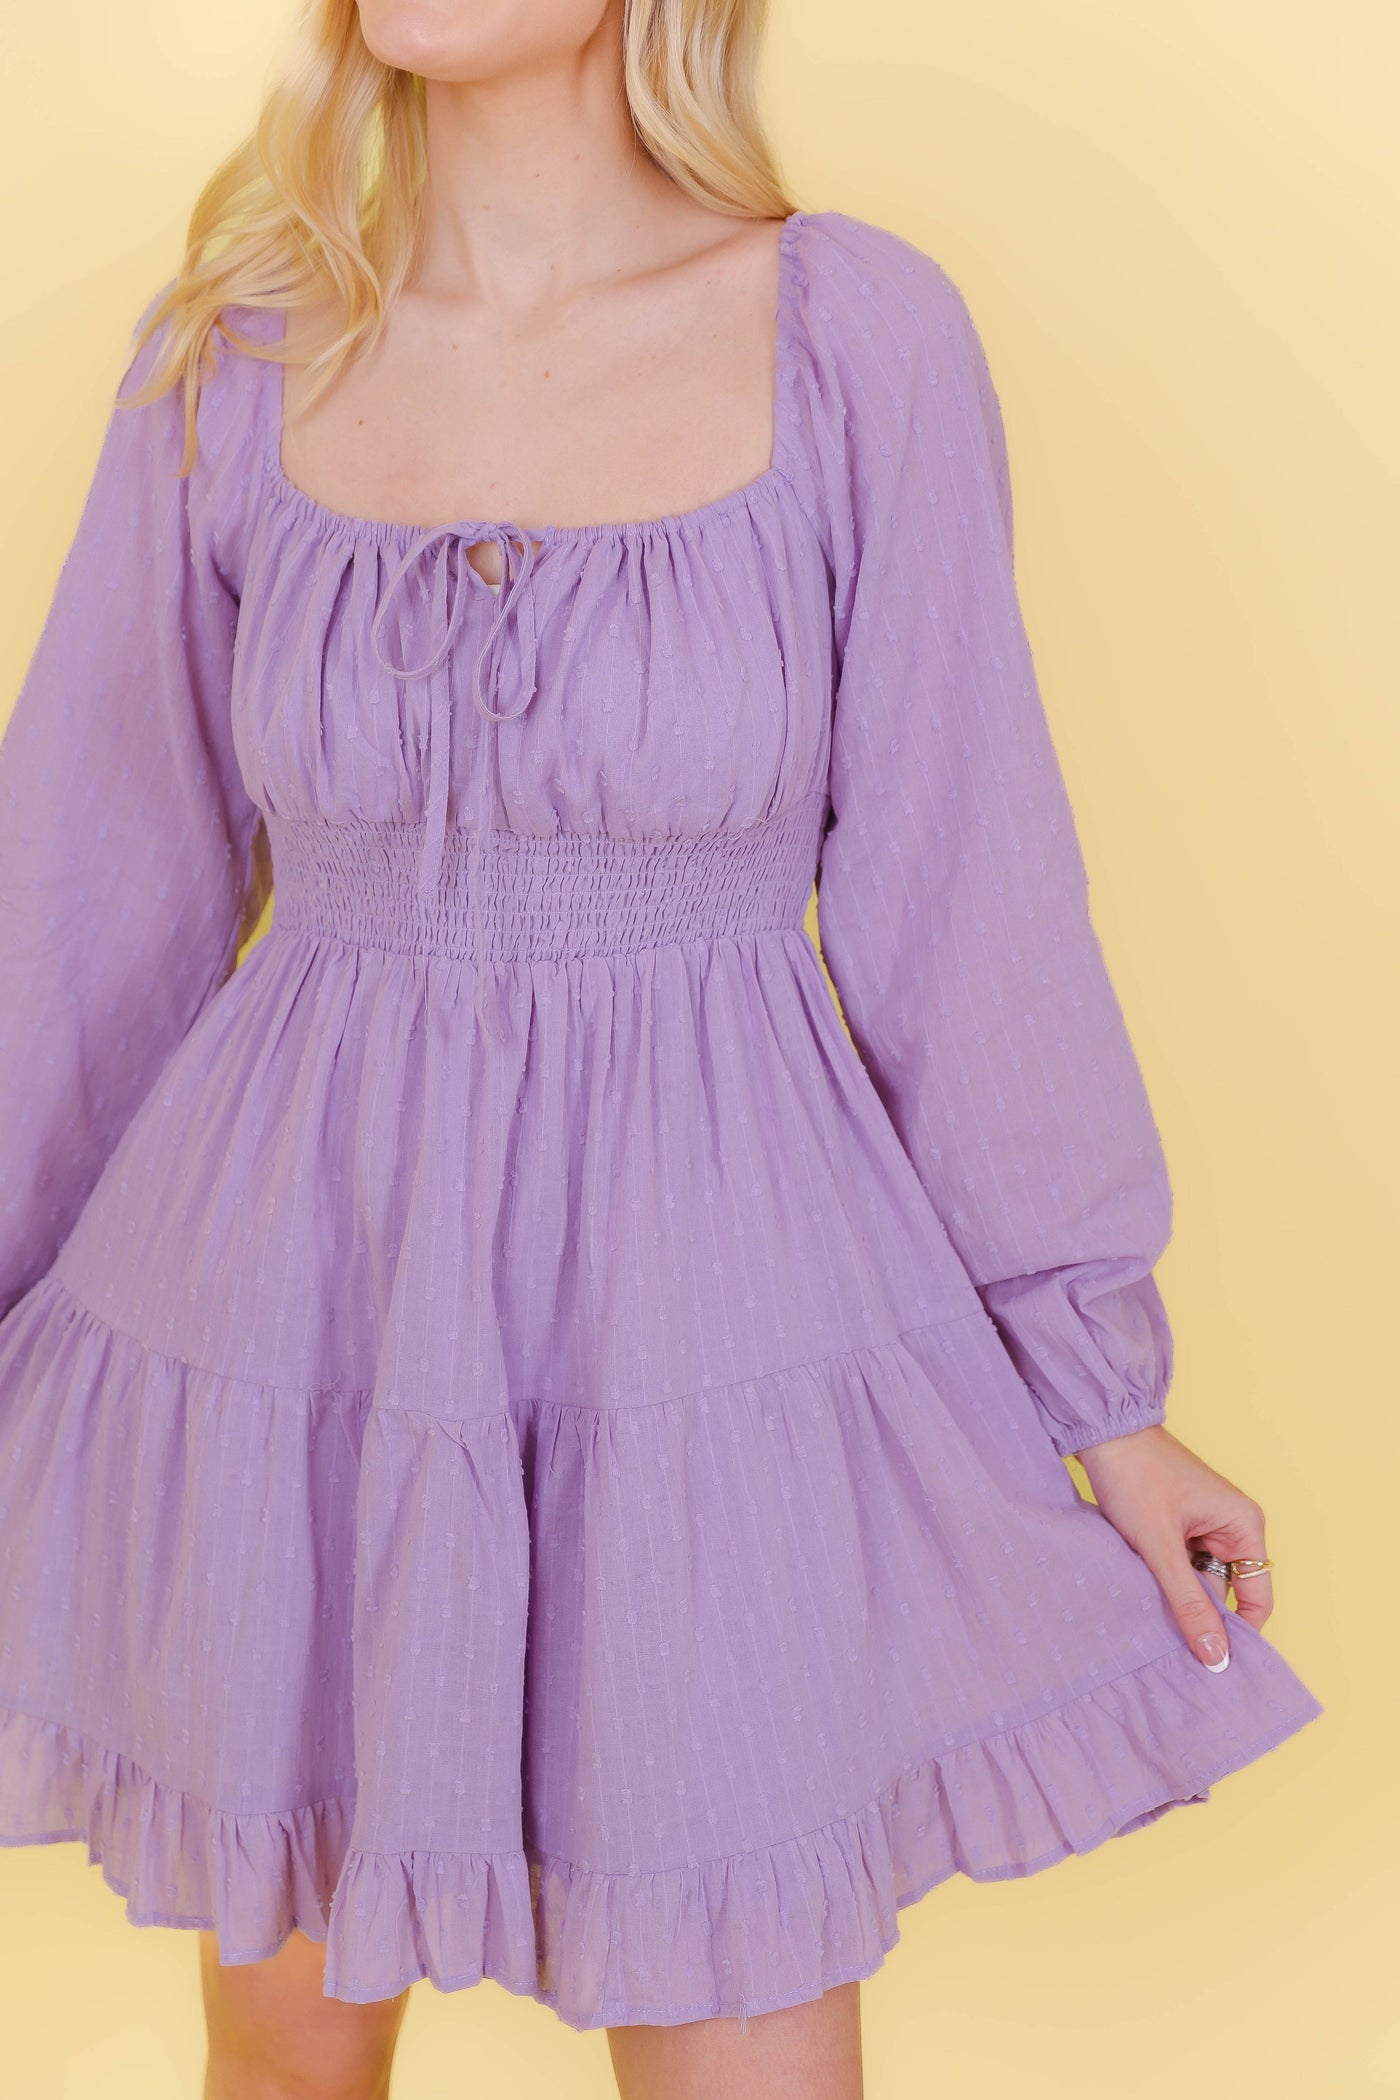 Lilac Swiss Dot Dress- Pretty Long Sleeve Dress- Women's Dress With Elastic Waistband